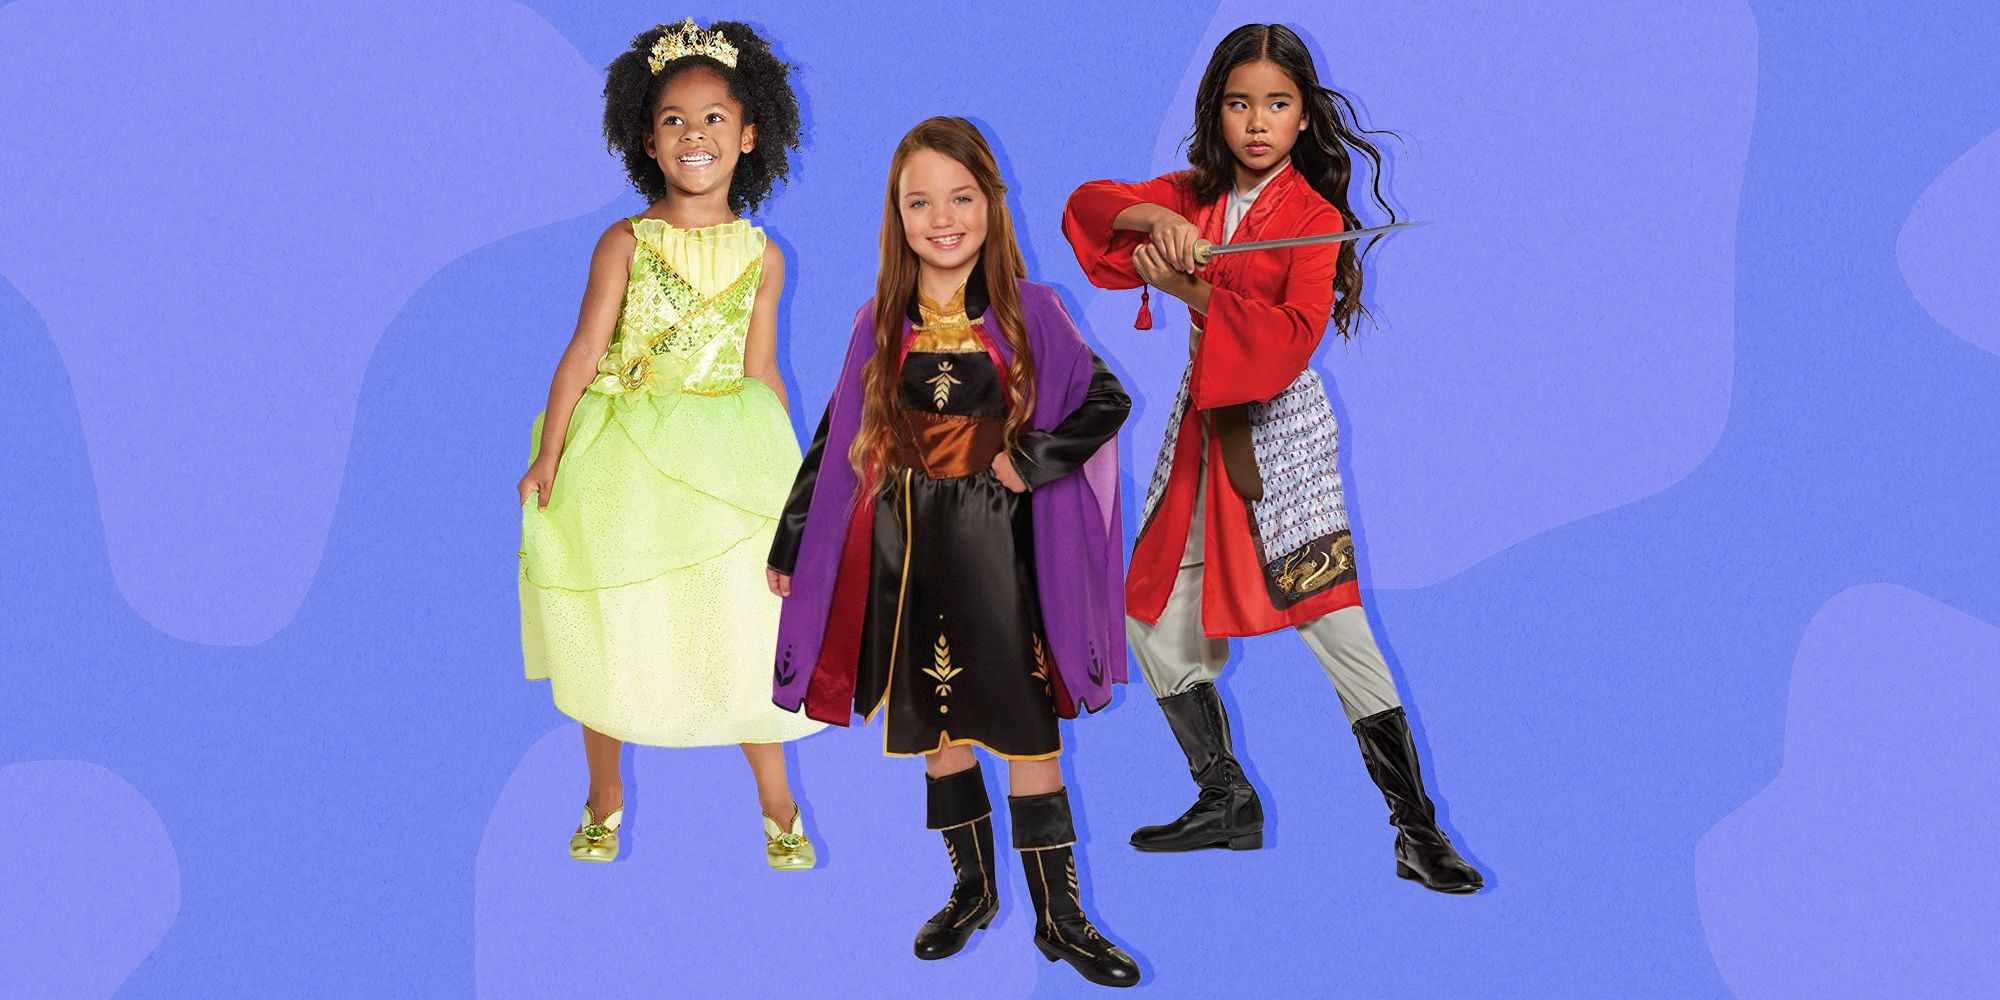 WonderBabe Girls Princess Costume Little Girls Fancy Party Birthday Dress up Halloween Outfit Kids Dress 